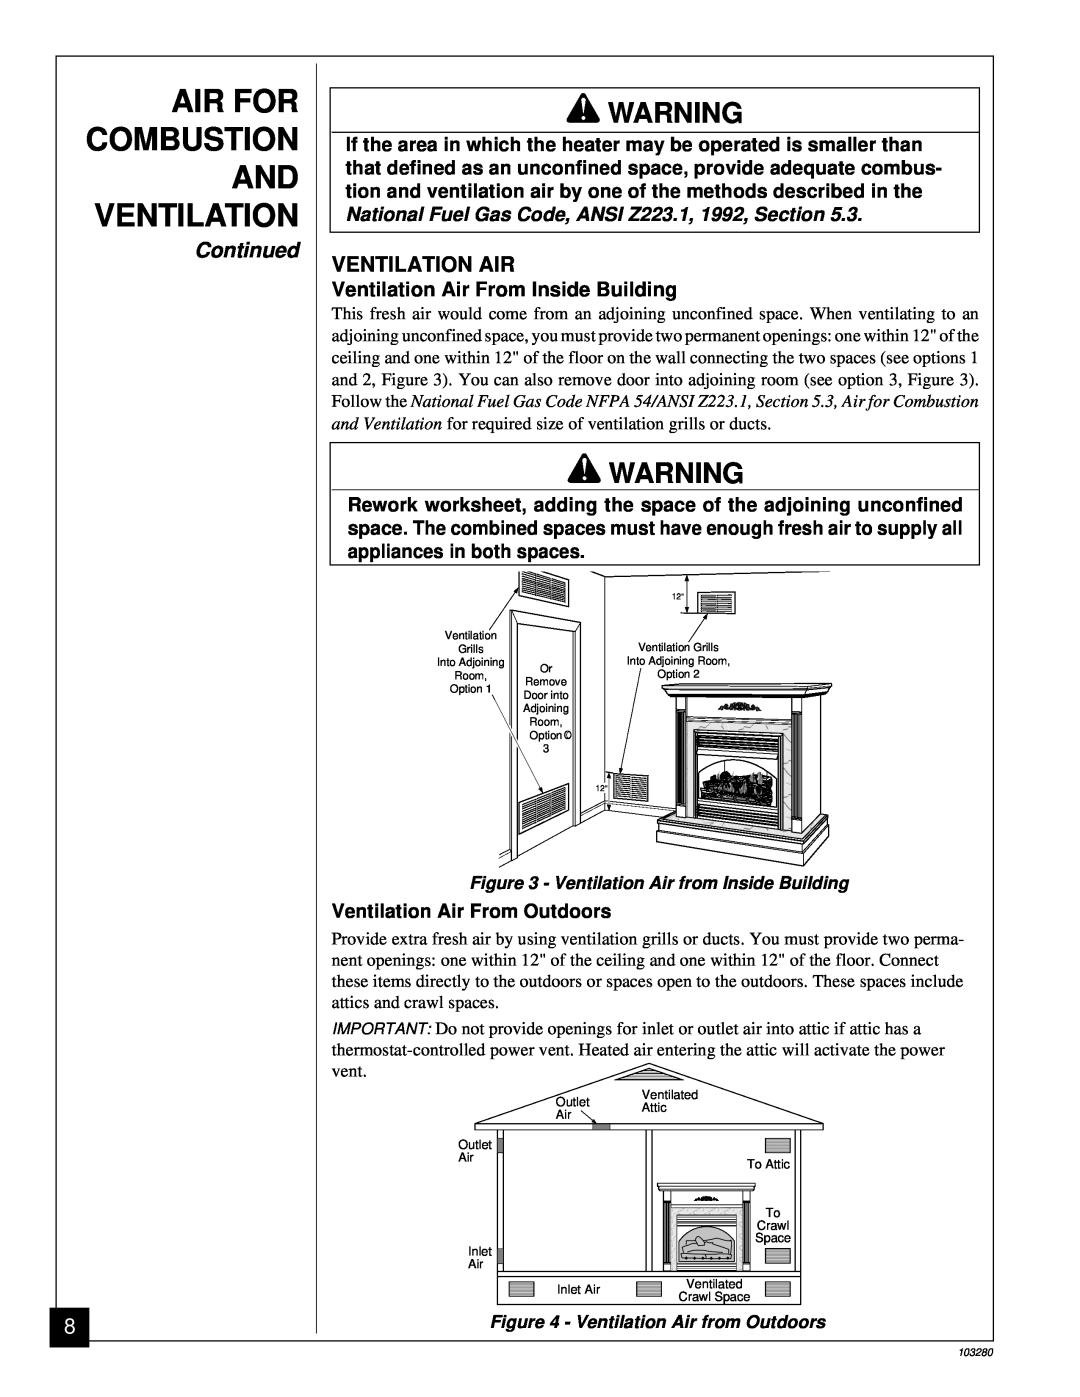 Desa FPVF33PR installation manual Ventilation Air, Qqqq¢¢¢¢, Air For Combustion And Ventilation, Continued 